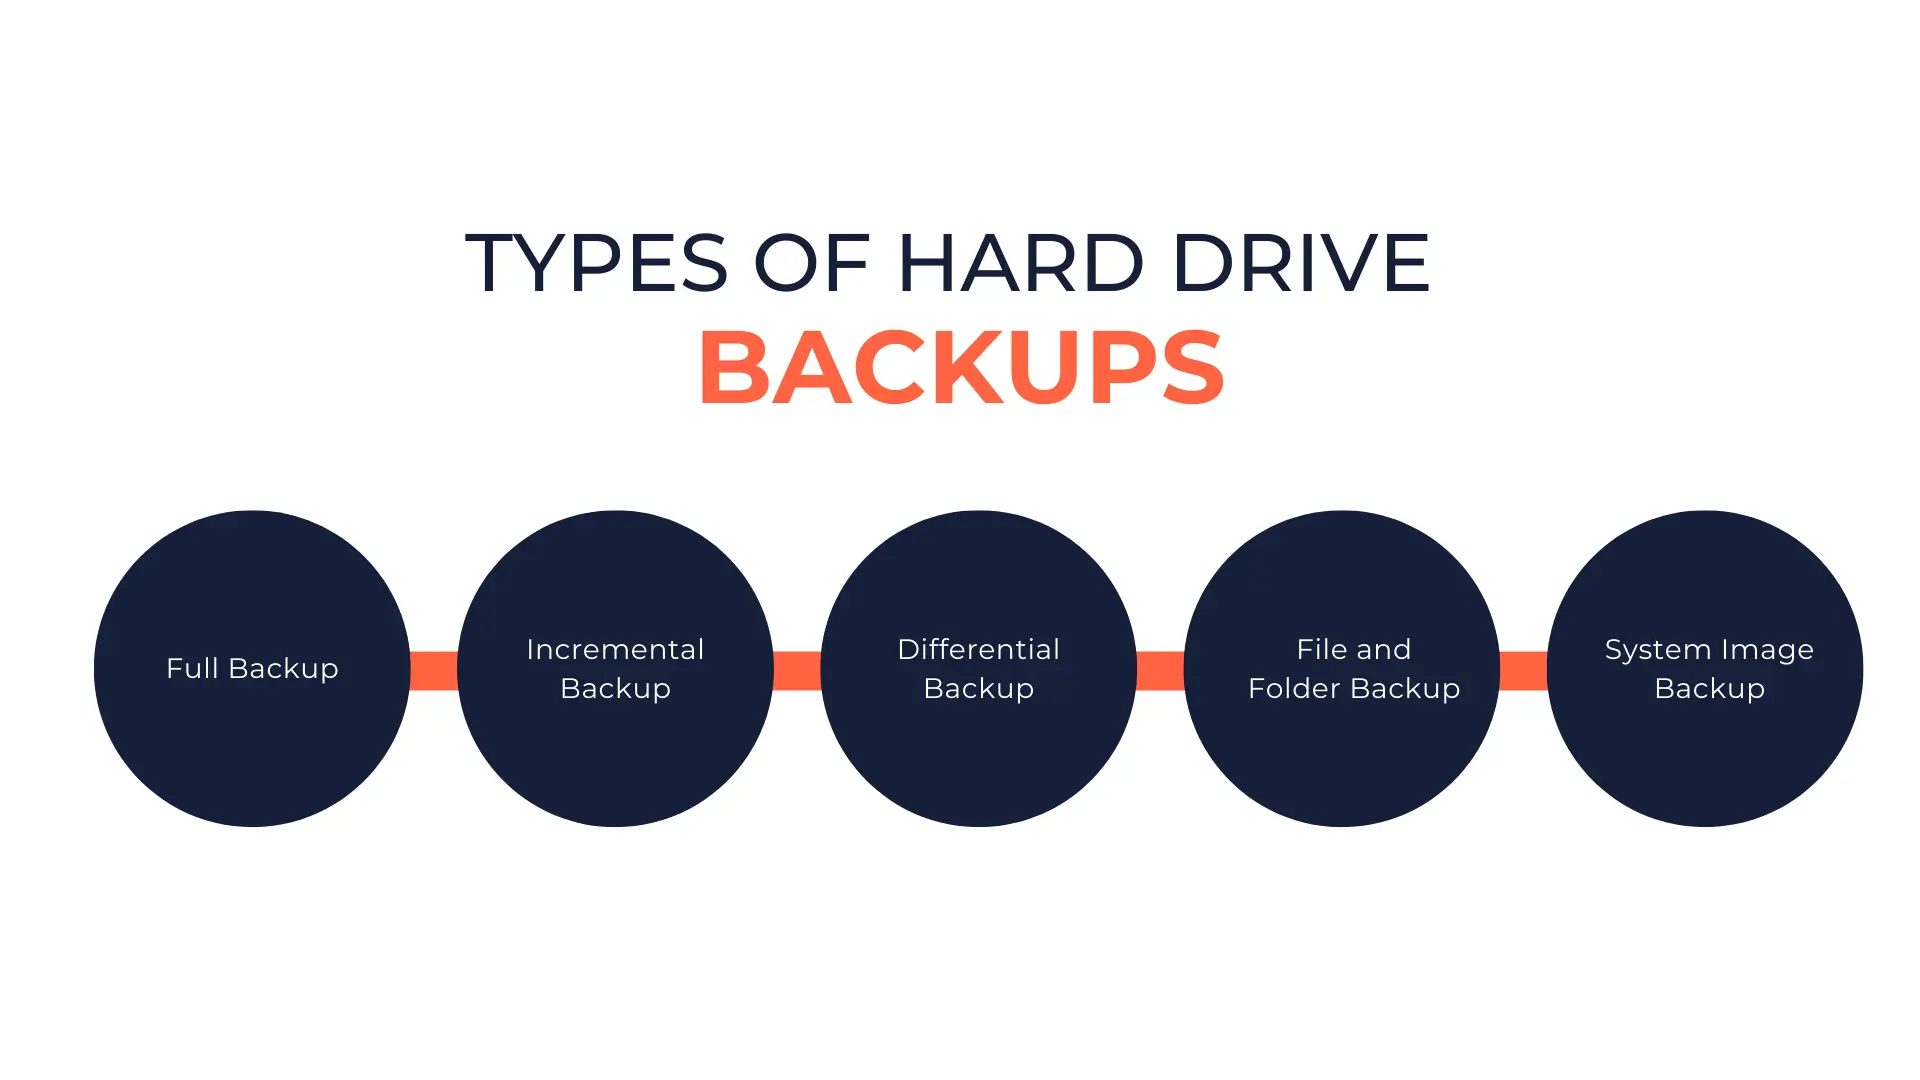 Types of Hard Drive Backups